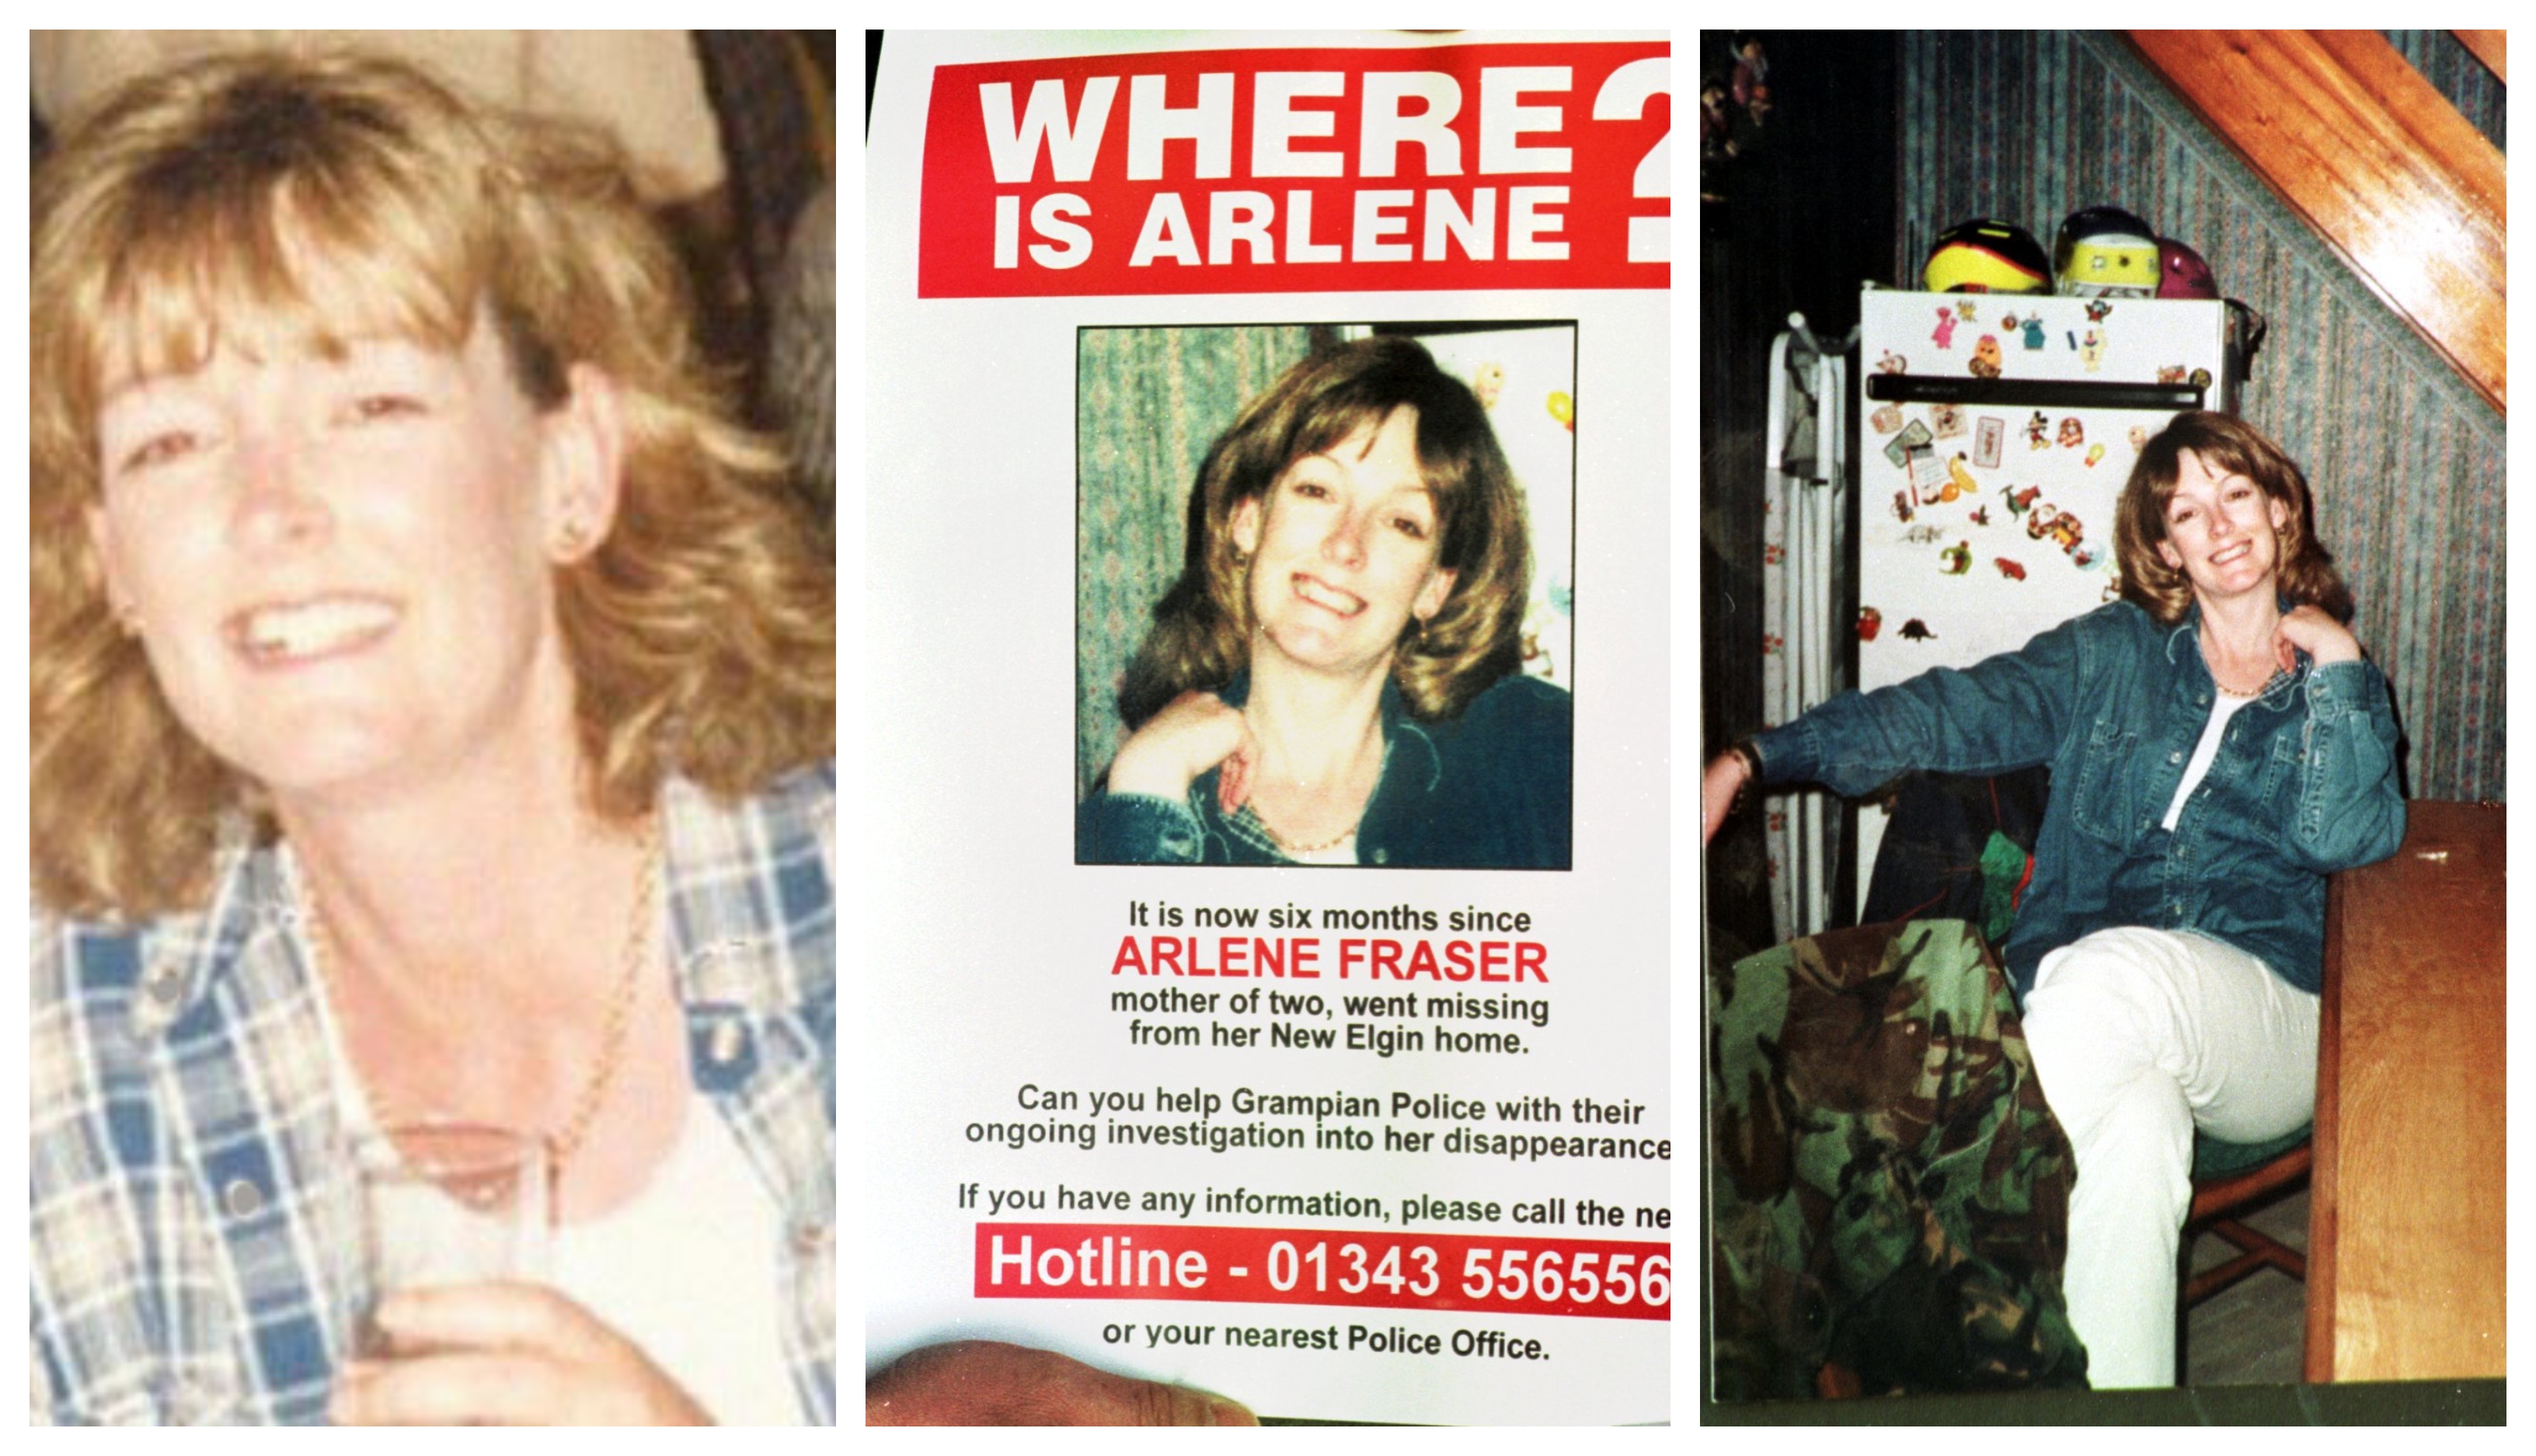 Arlene went missing from her Elgin home in April 1988